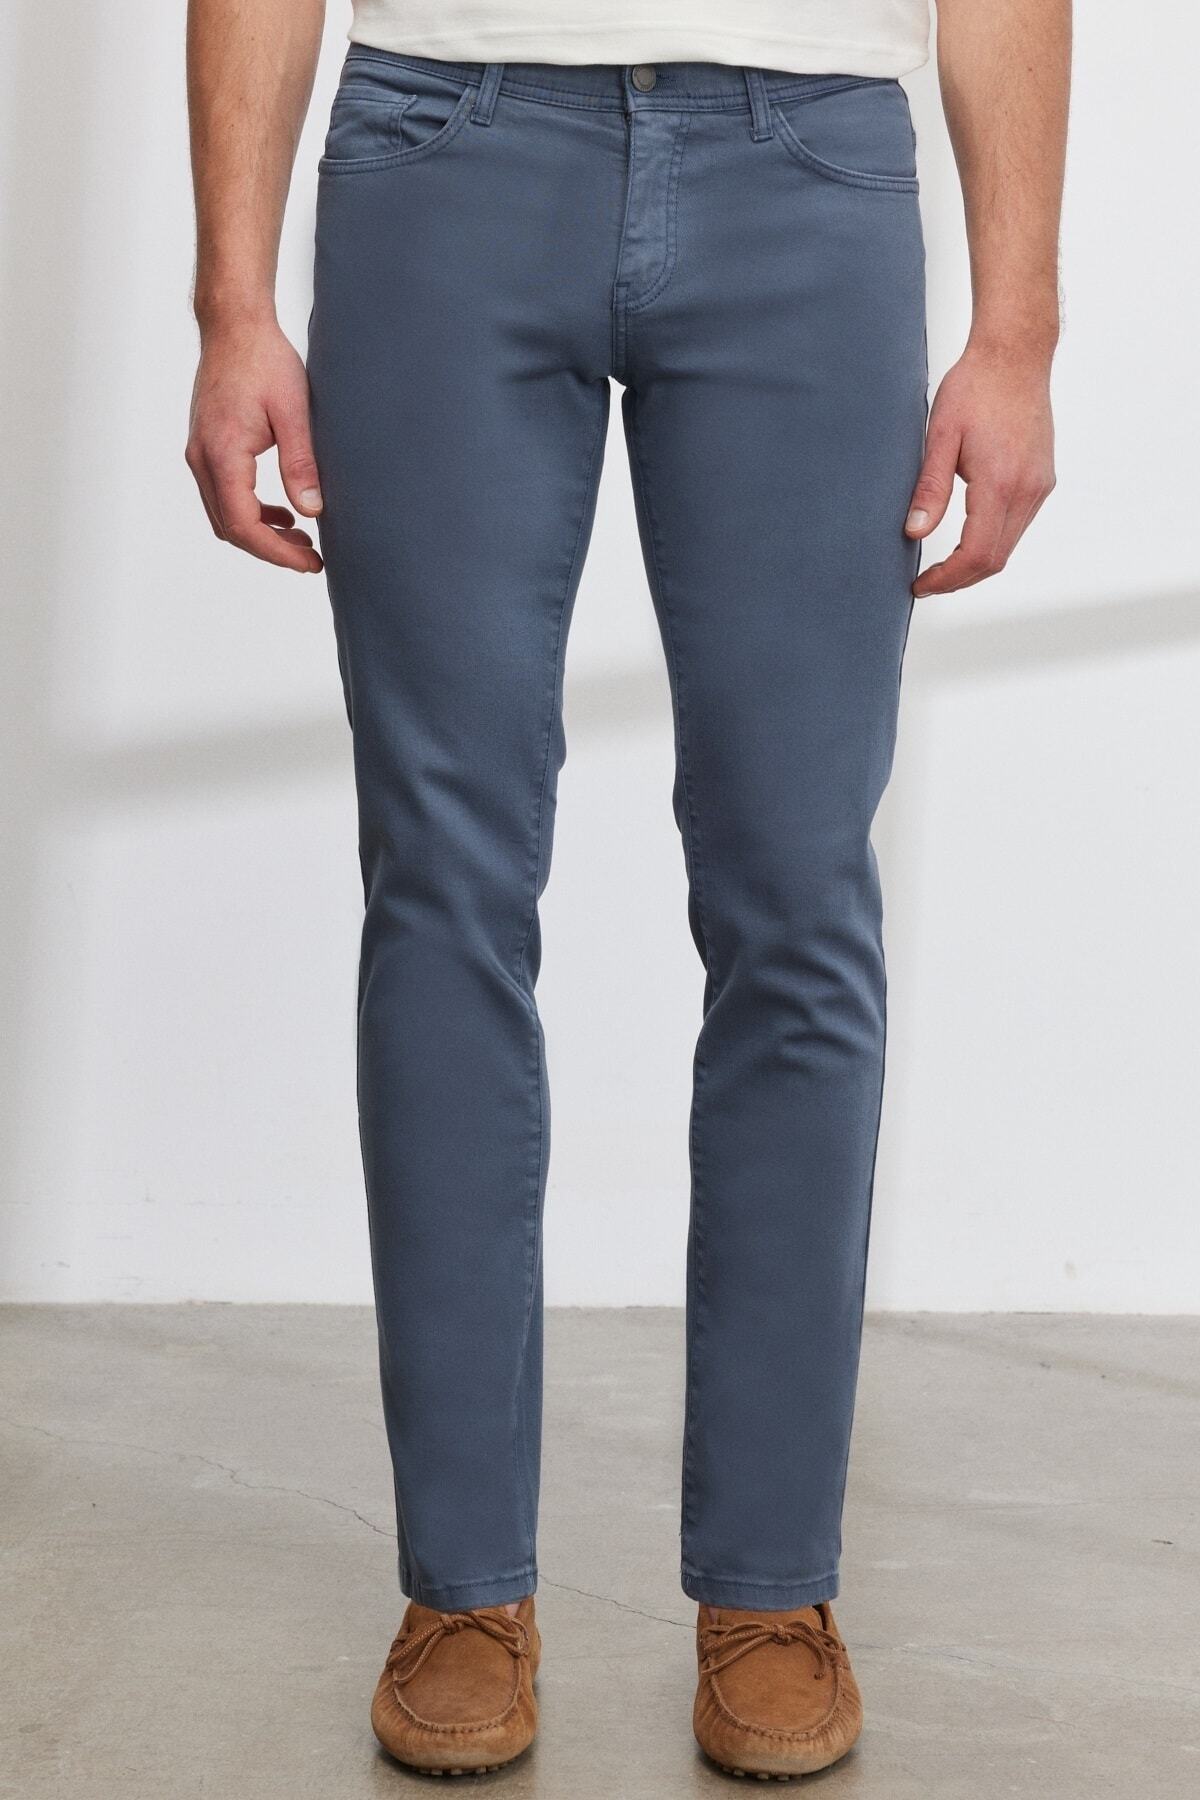 ALTINYILDIZ CLASSICS Men's Indigo Comfortable Slim Fit Slim-Fit Pants that Stretches 360 Degrees in All Directions.